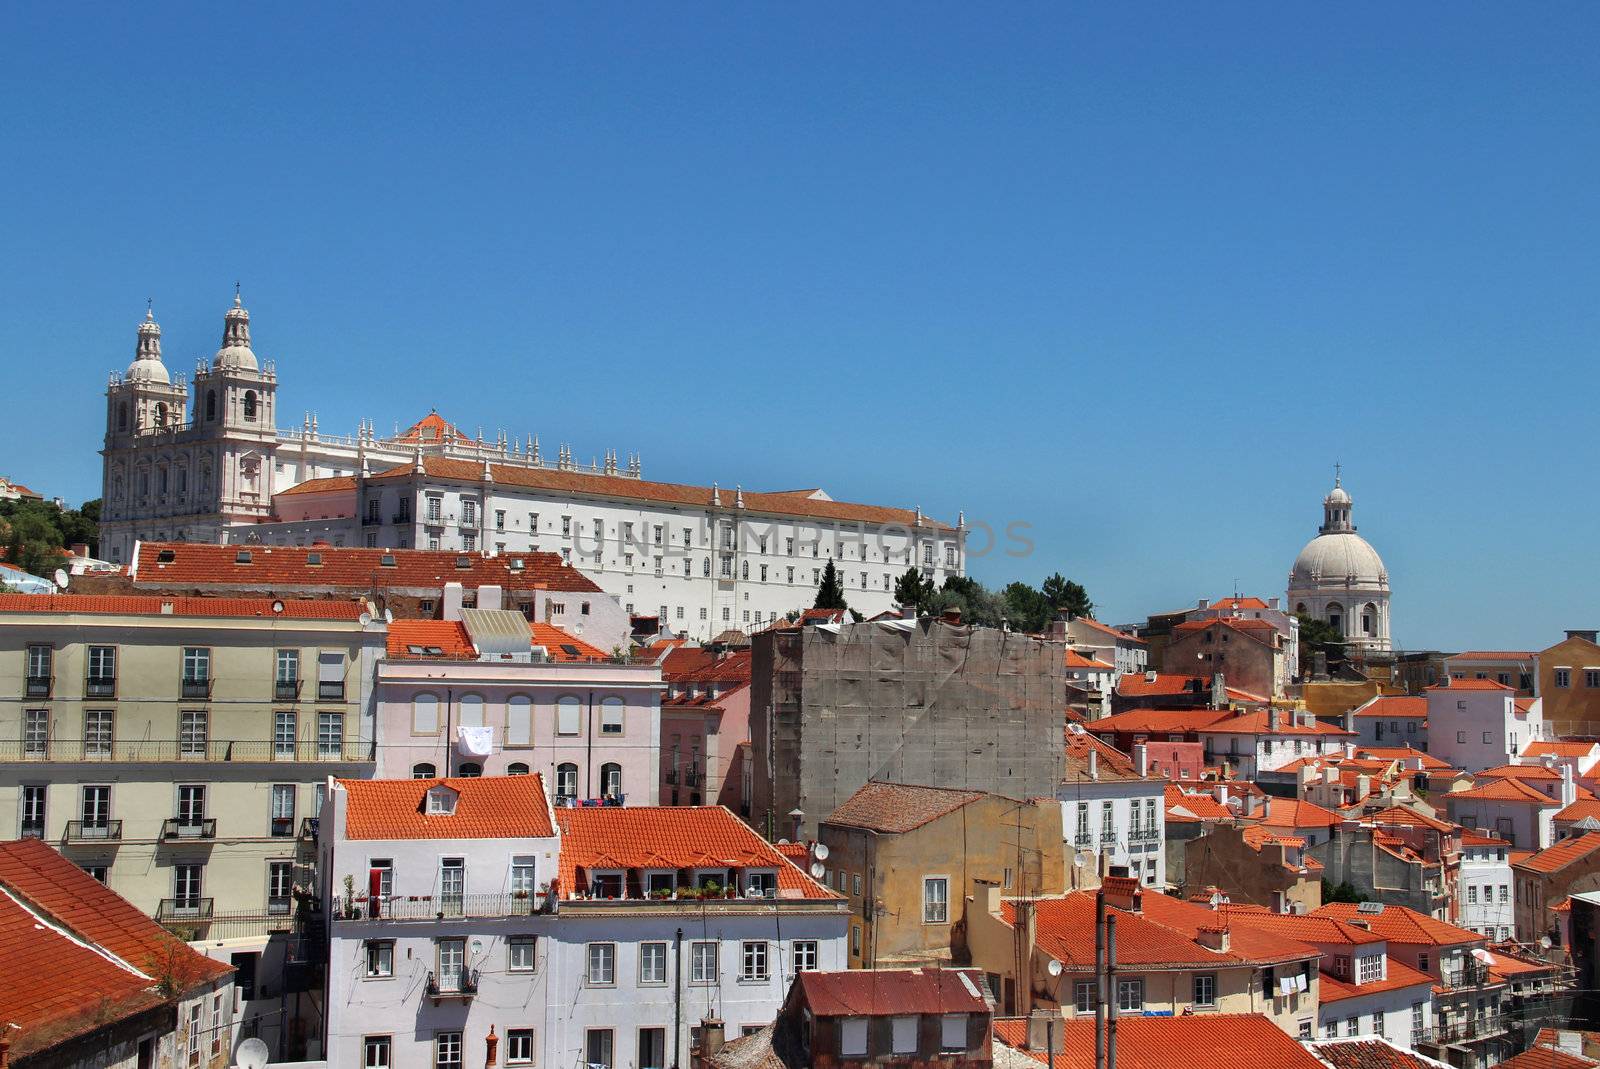 Lisbon Alfama panorama, Portugal � buildings, roofs, churches